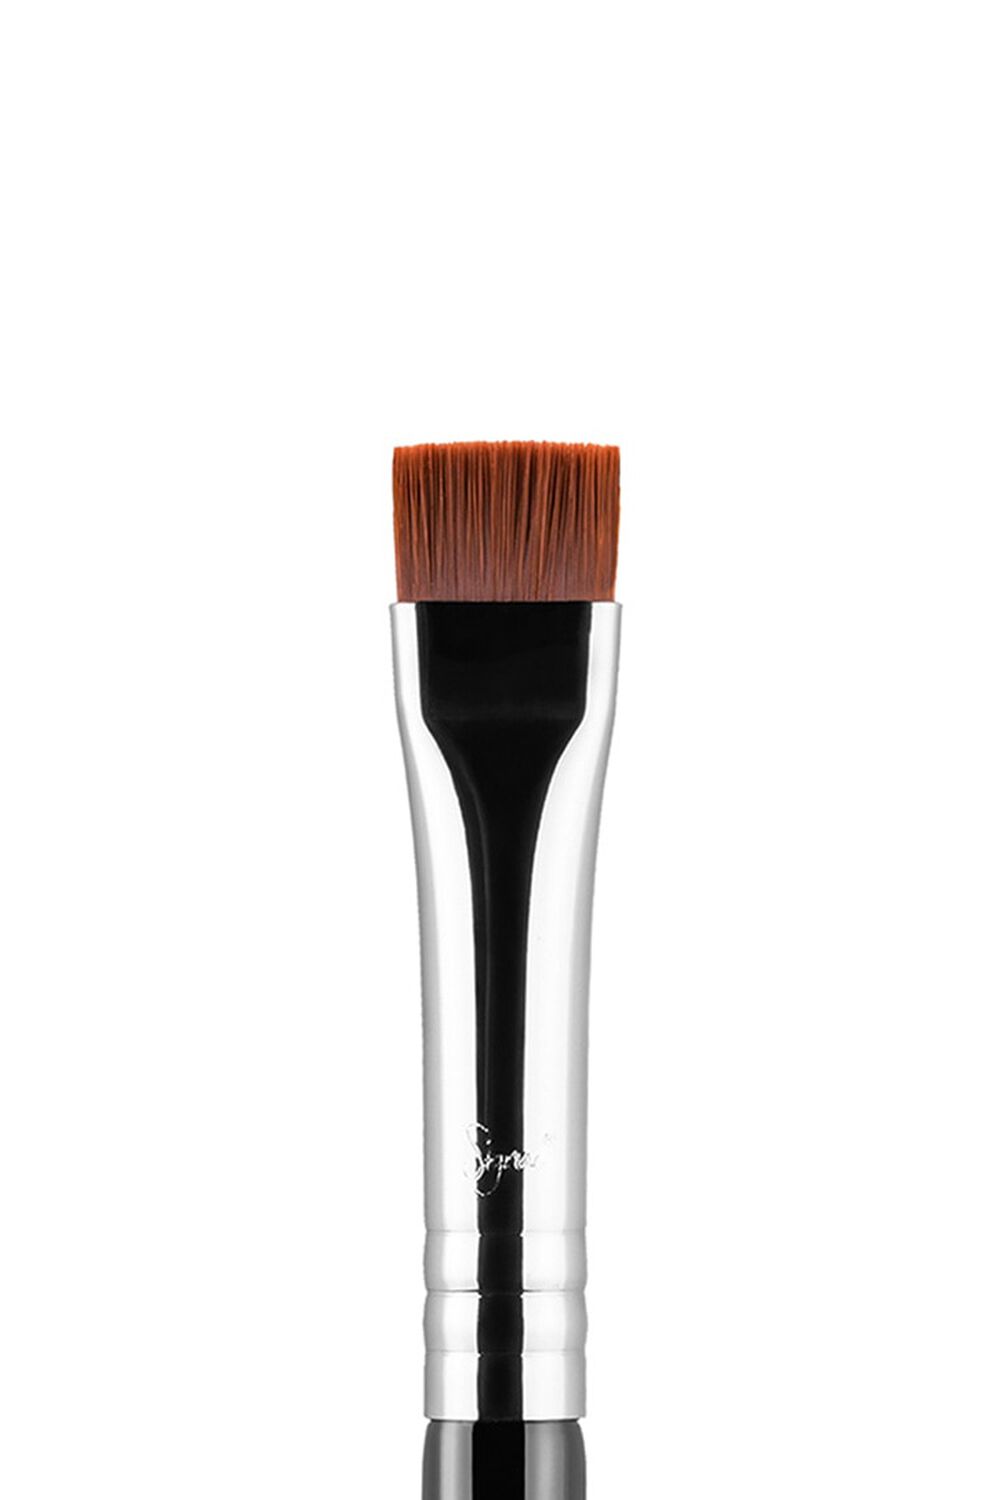 Sigma Beauty E15 – Flat Definer Brush, image 2